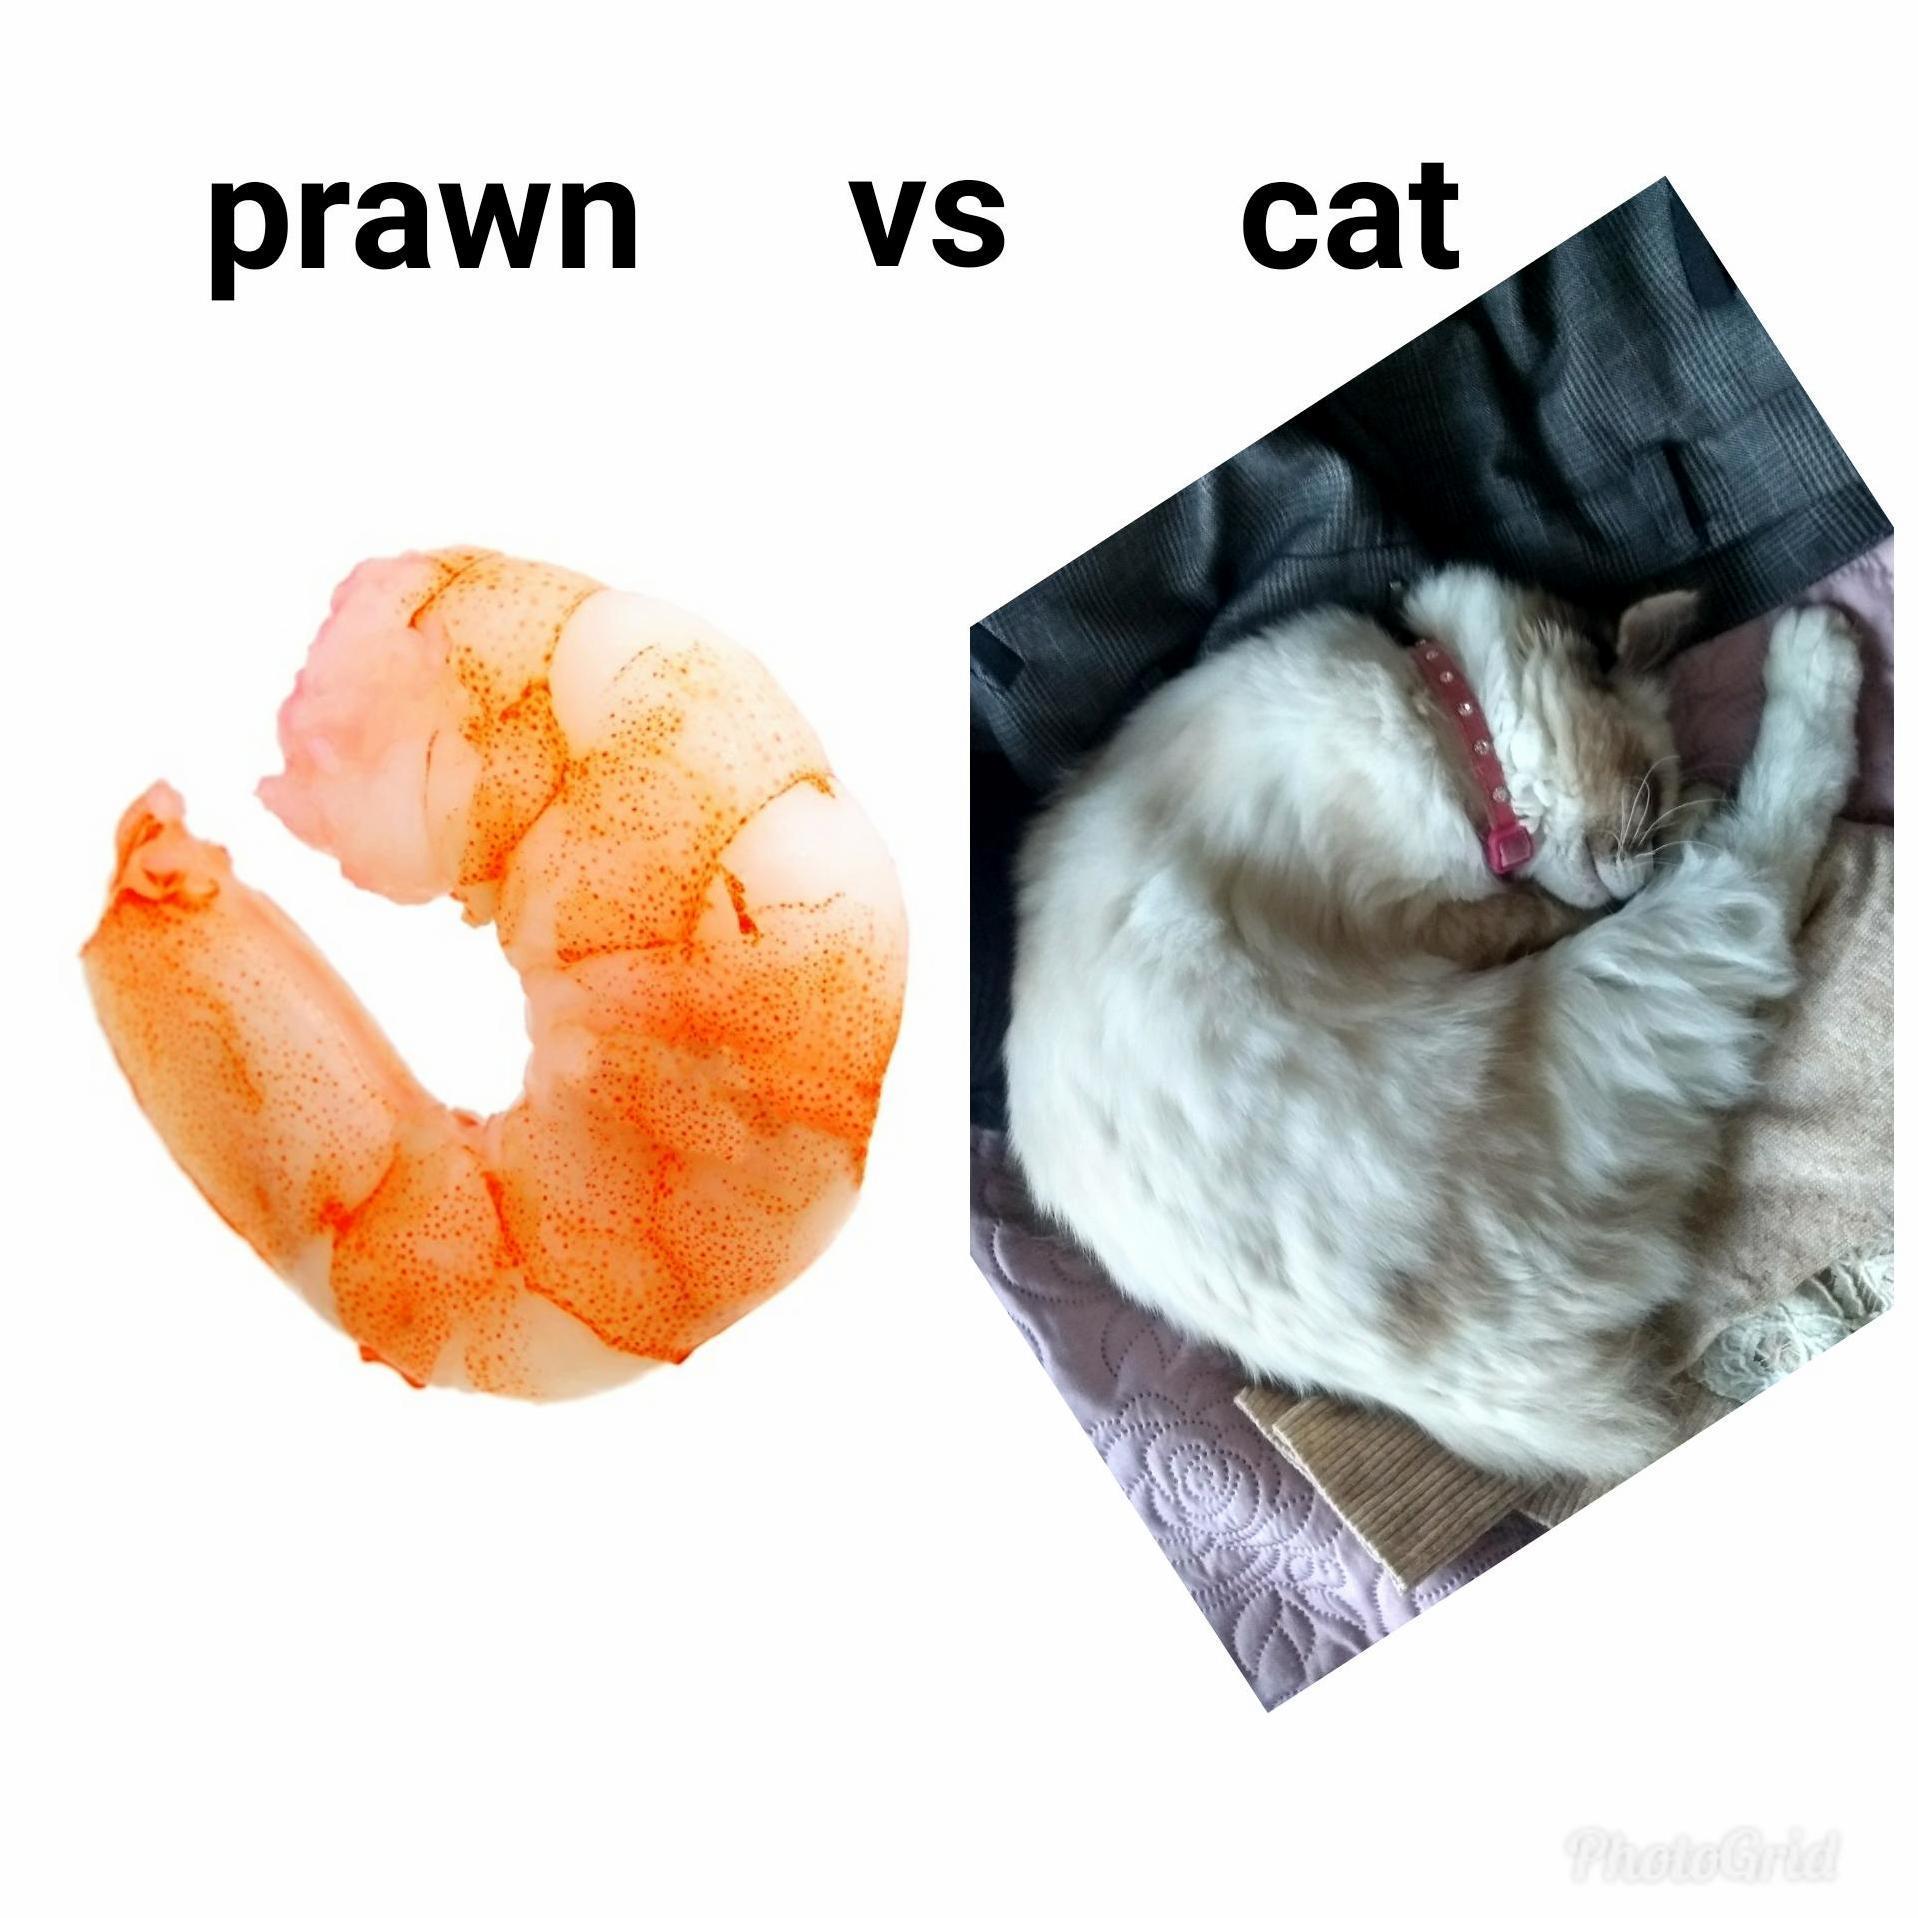 Prawn vs cat